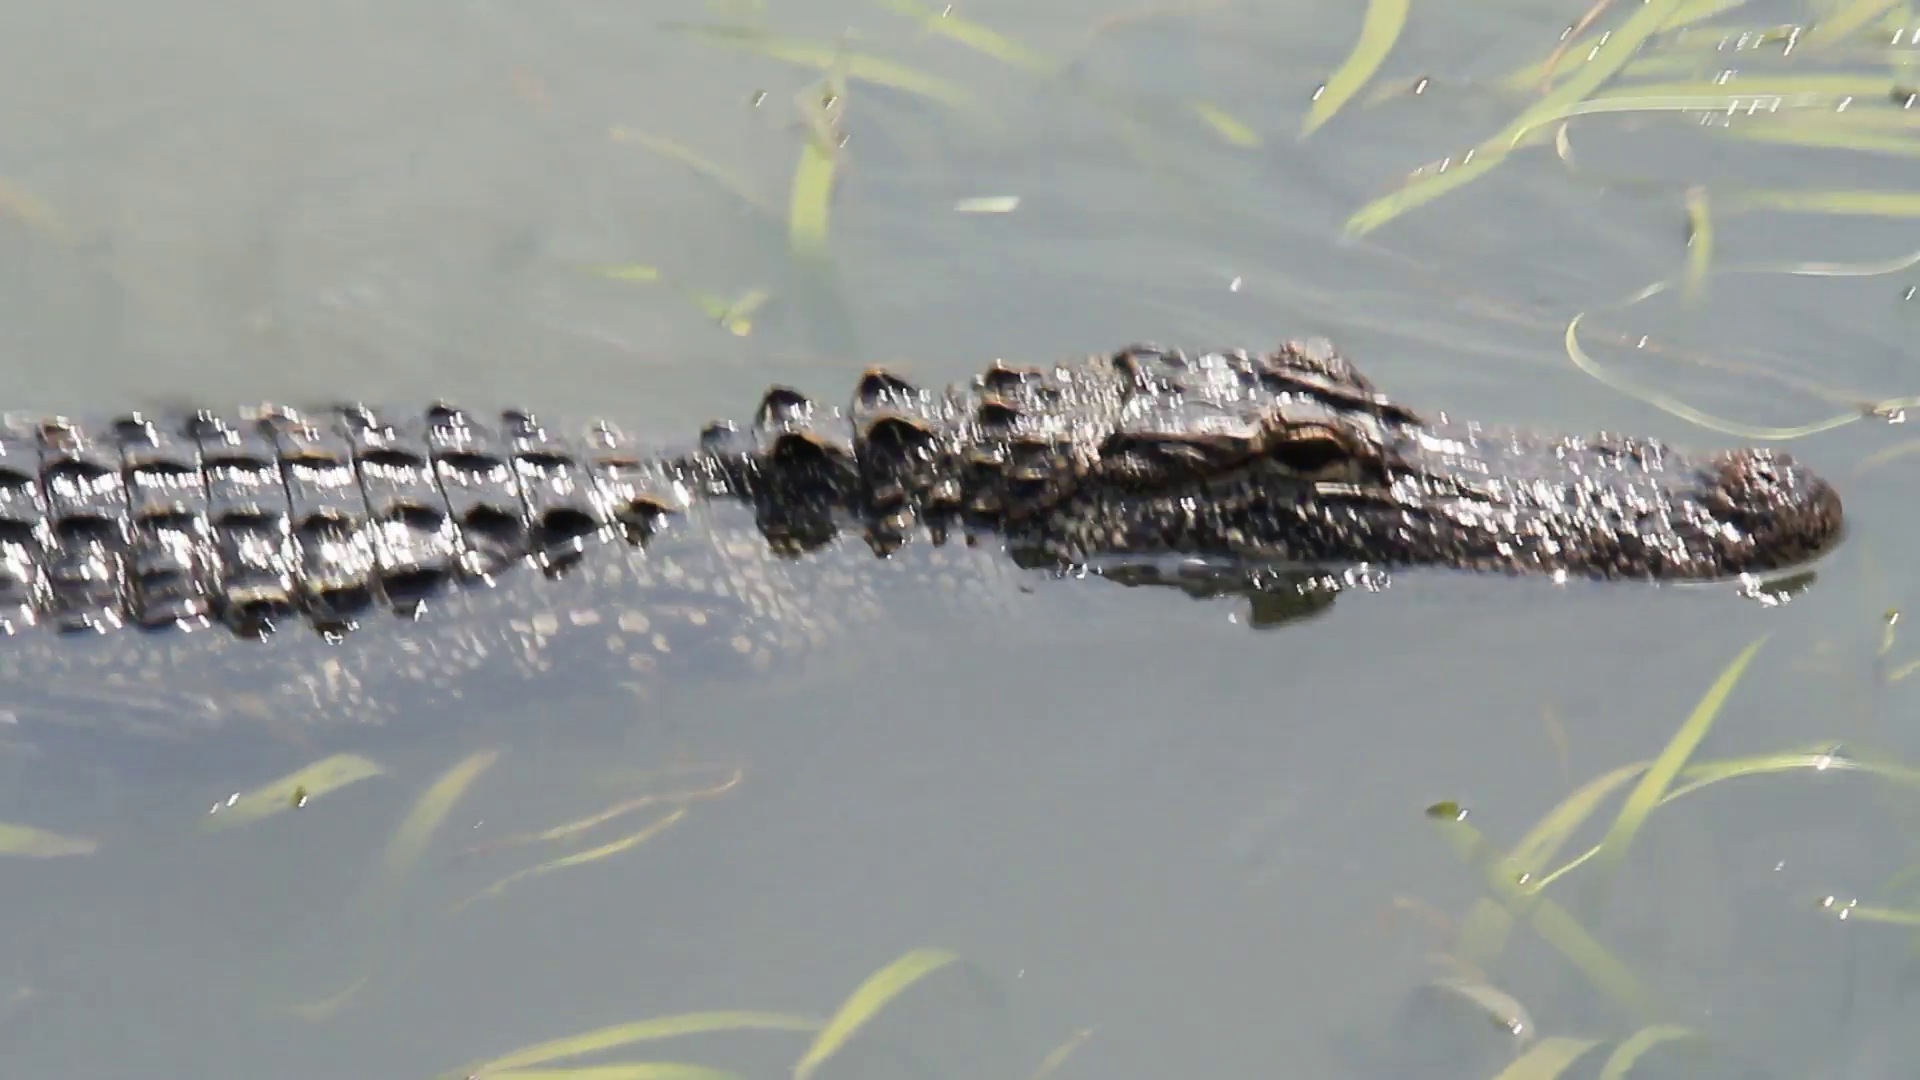 Alligator in the Bayou 3. Wild American Alligator in a swamp in the ...